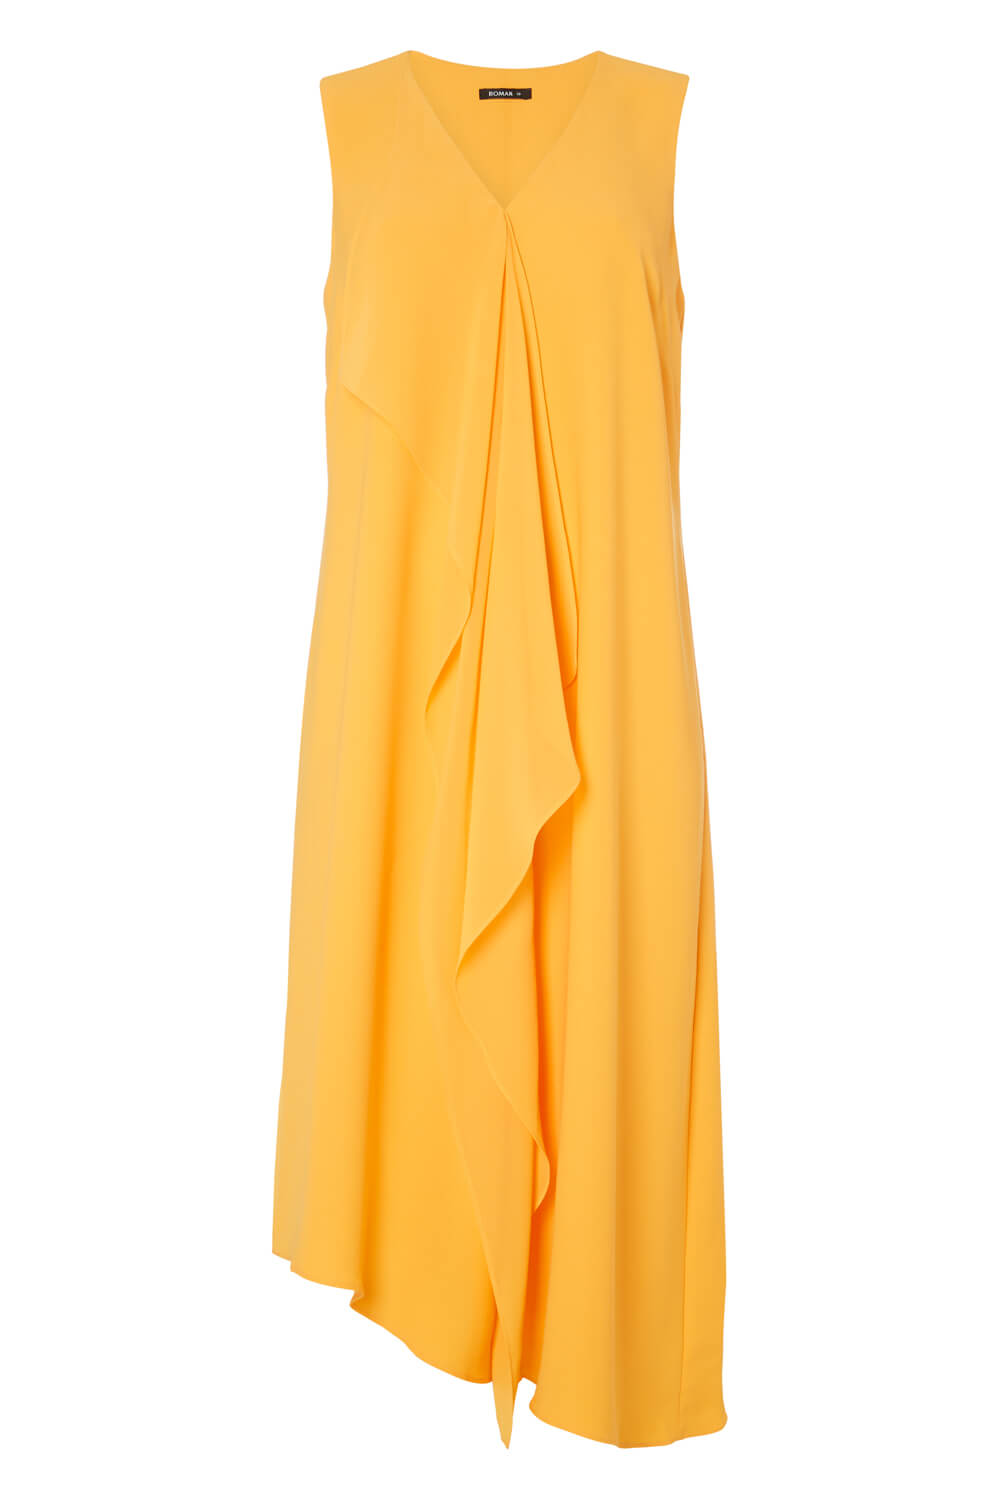 Waterfall Front Dress in Yellow - Roman Originals UK